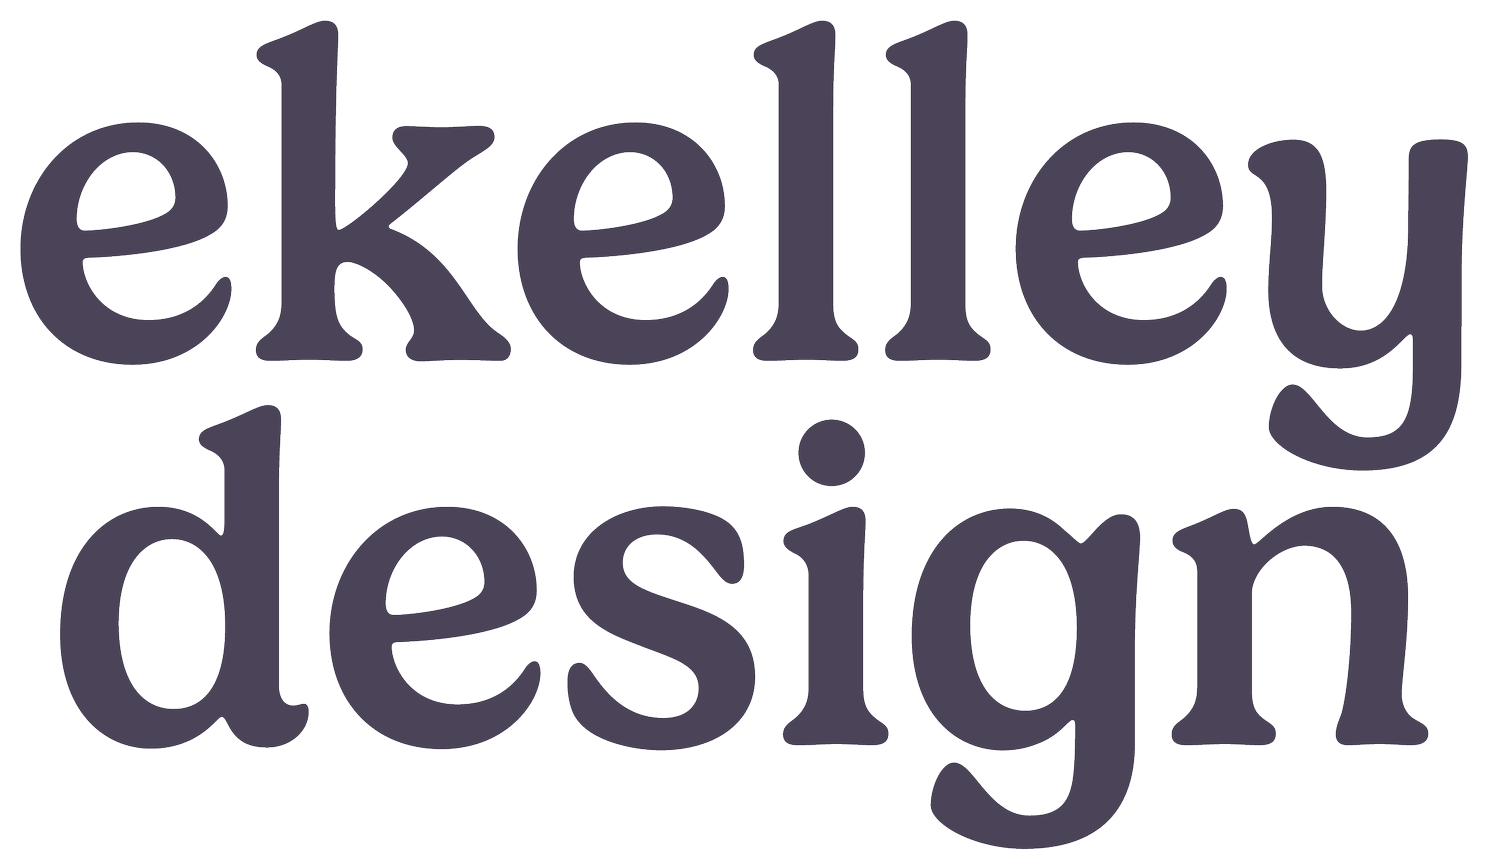 Emily Kelley Design